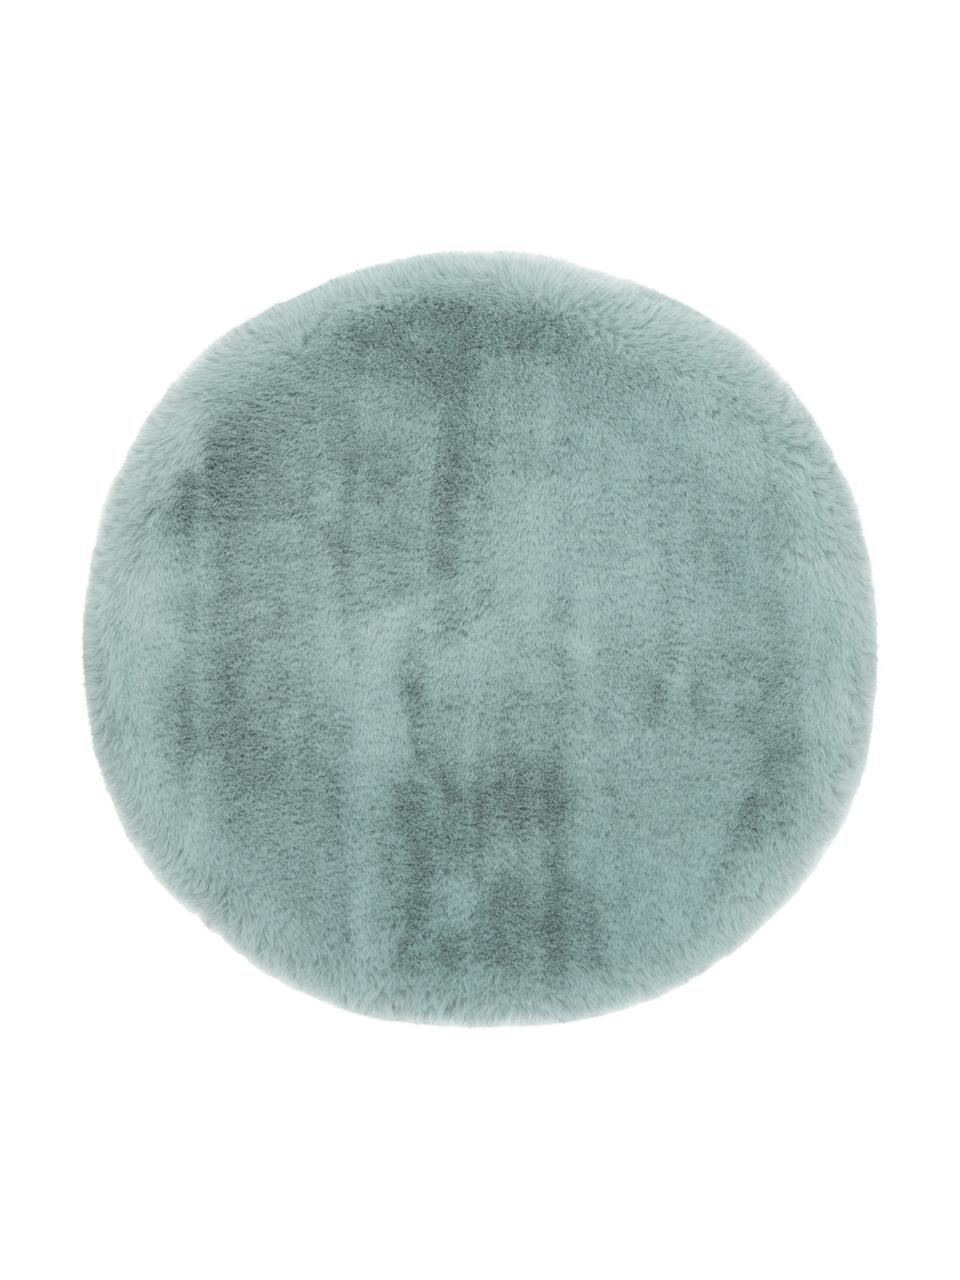 Cuscino sedia in pelliccia sintetica Matte, liscio, Retro: 100% poliestere, Verde, Ø 37 cm